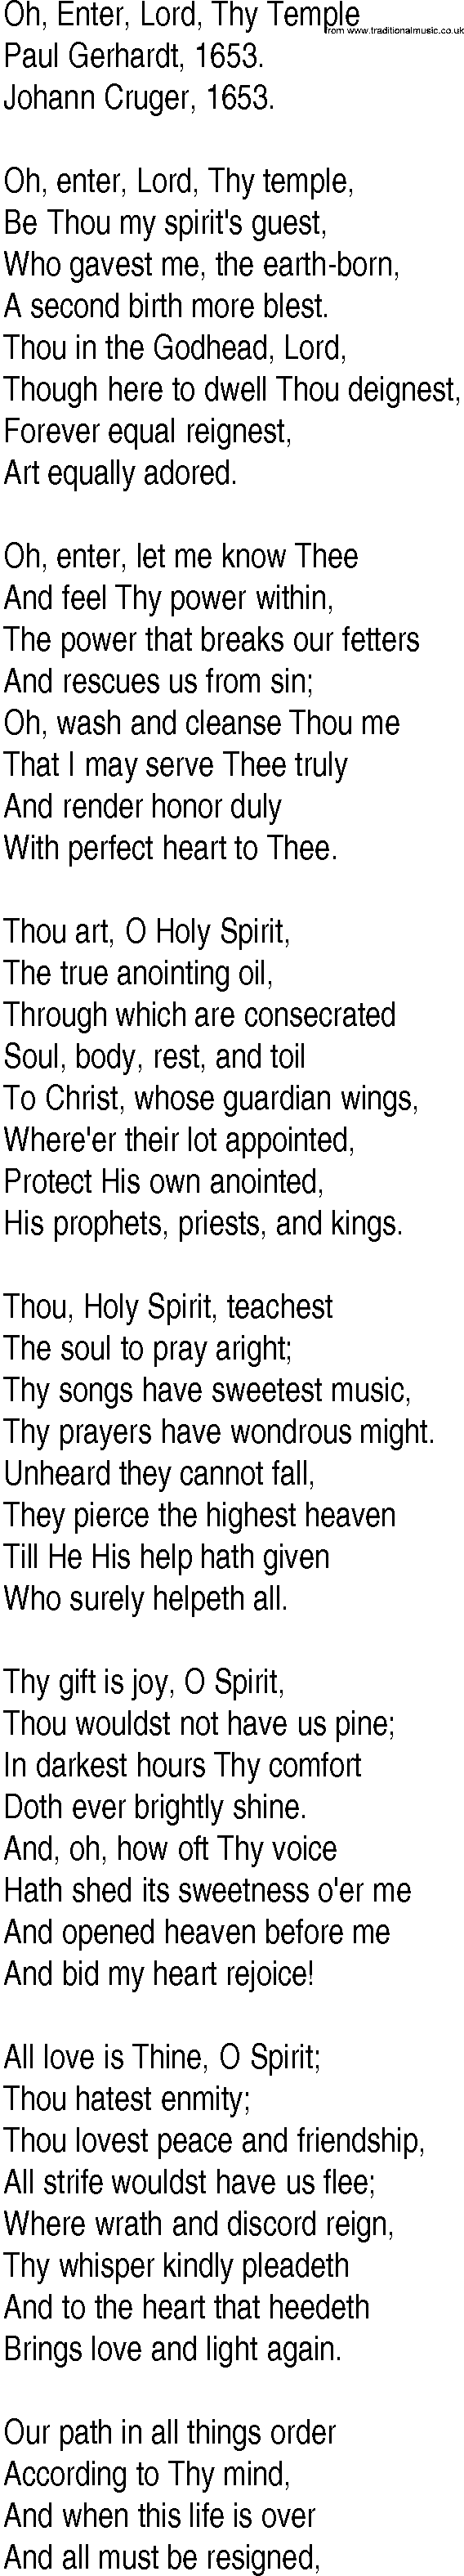 Hymn and Gospel Song: Oh, Enter, Lord, Thy Temple by Paul Gerhardt lyrics